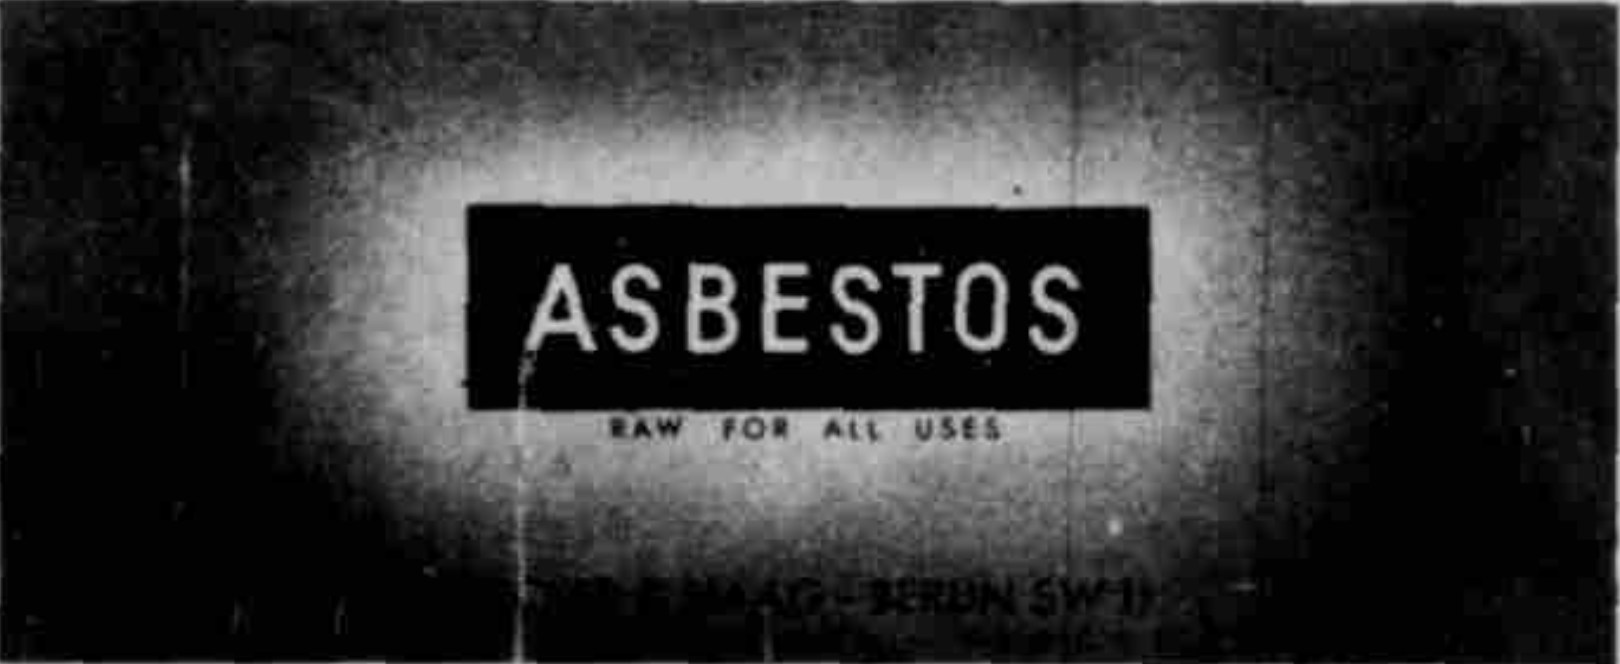 Asbestos All uses 1939 November AsbestosMagazine